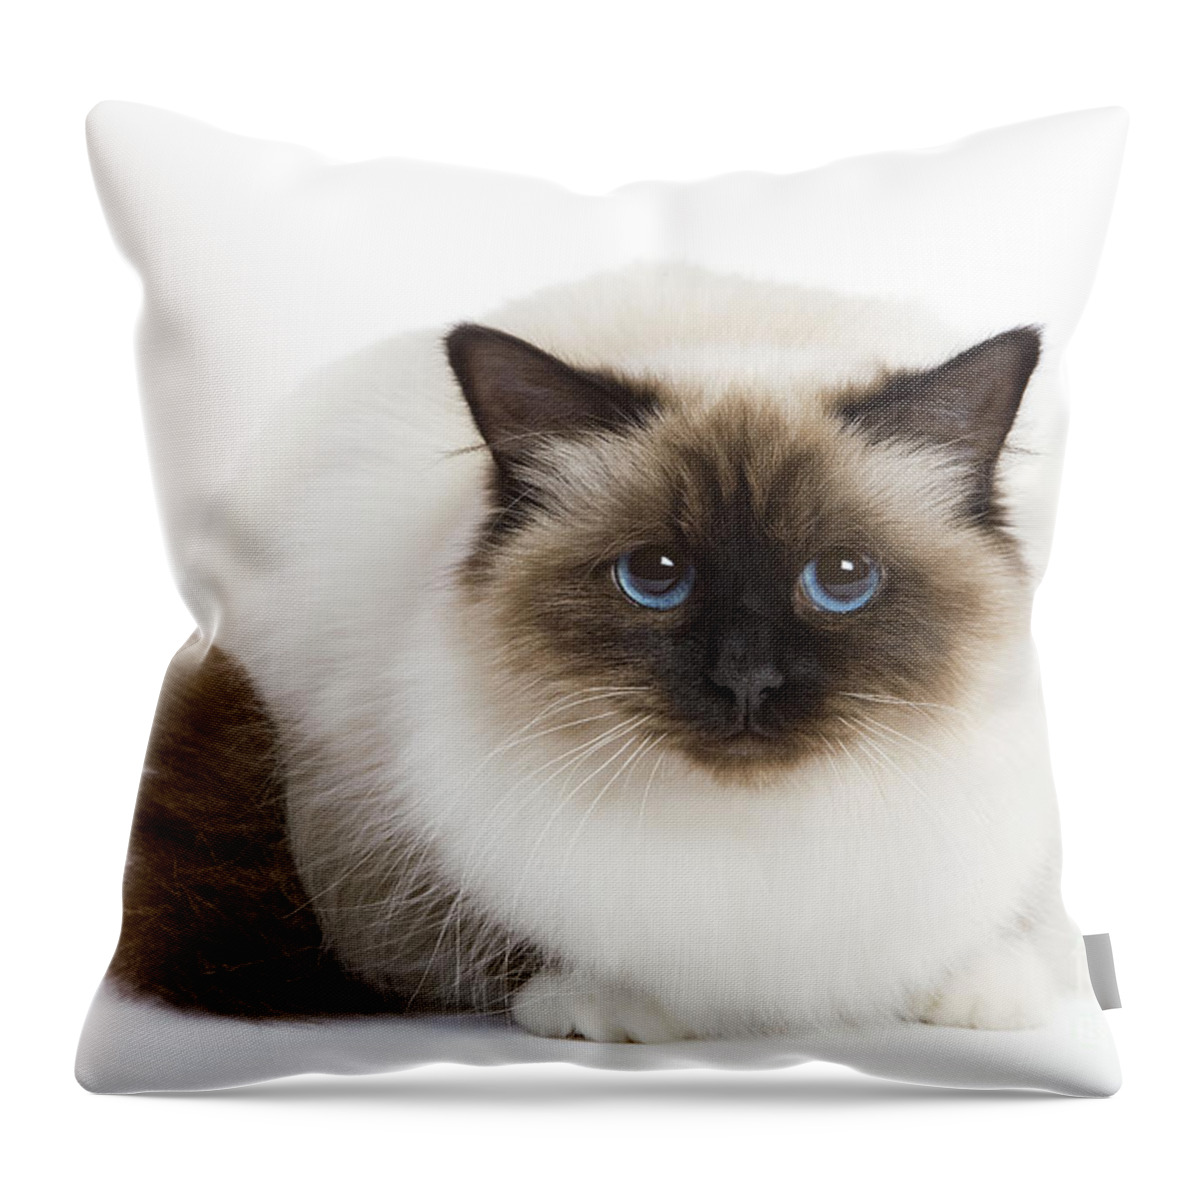 Cat Throw Pillow featuring the photograph Birman Cat by Jean-Michel Labat